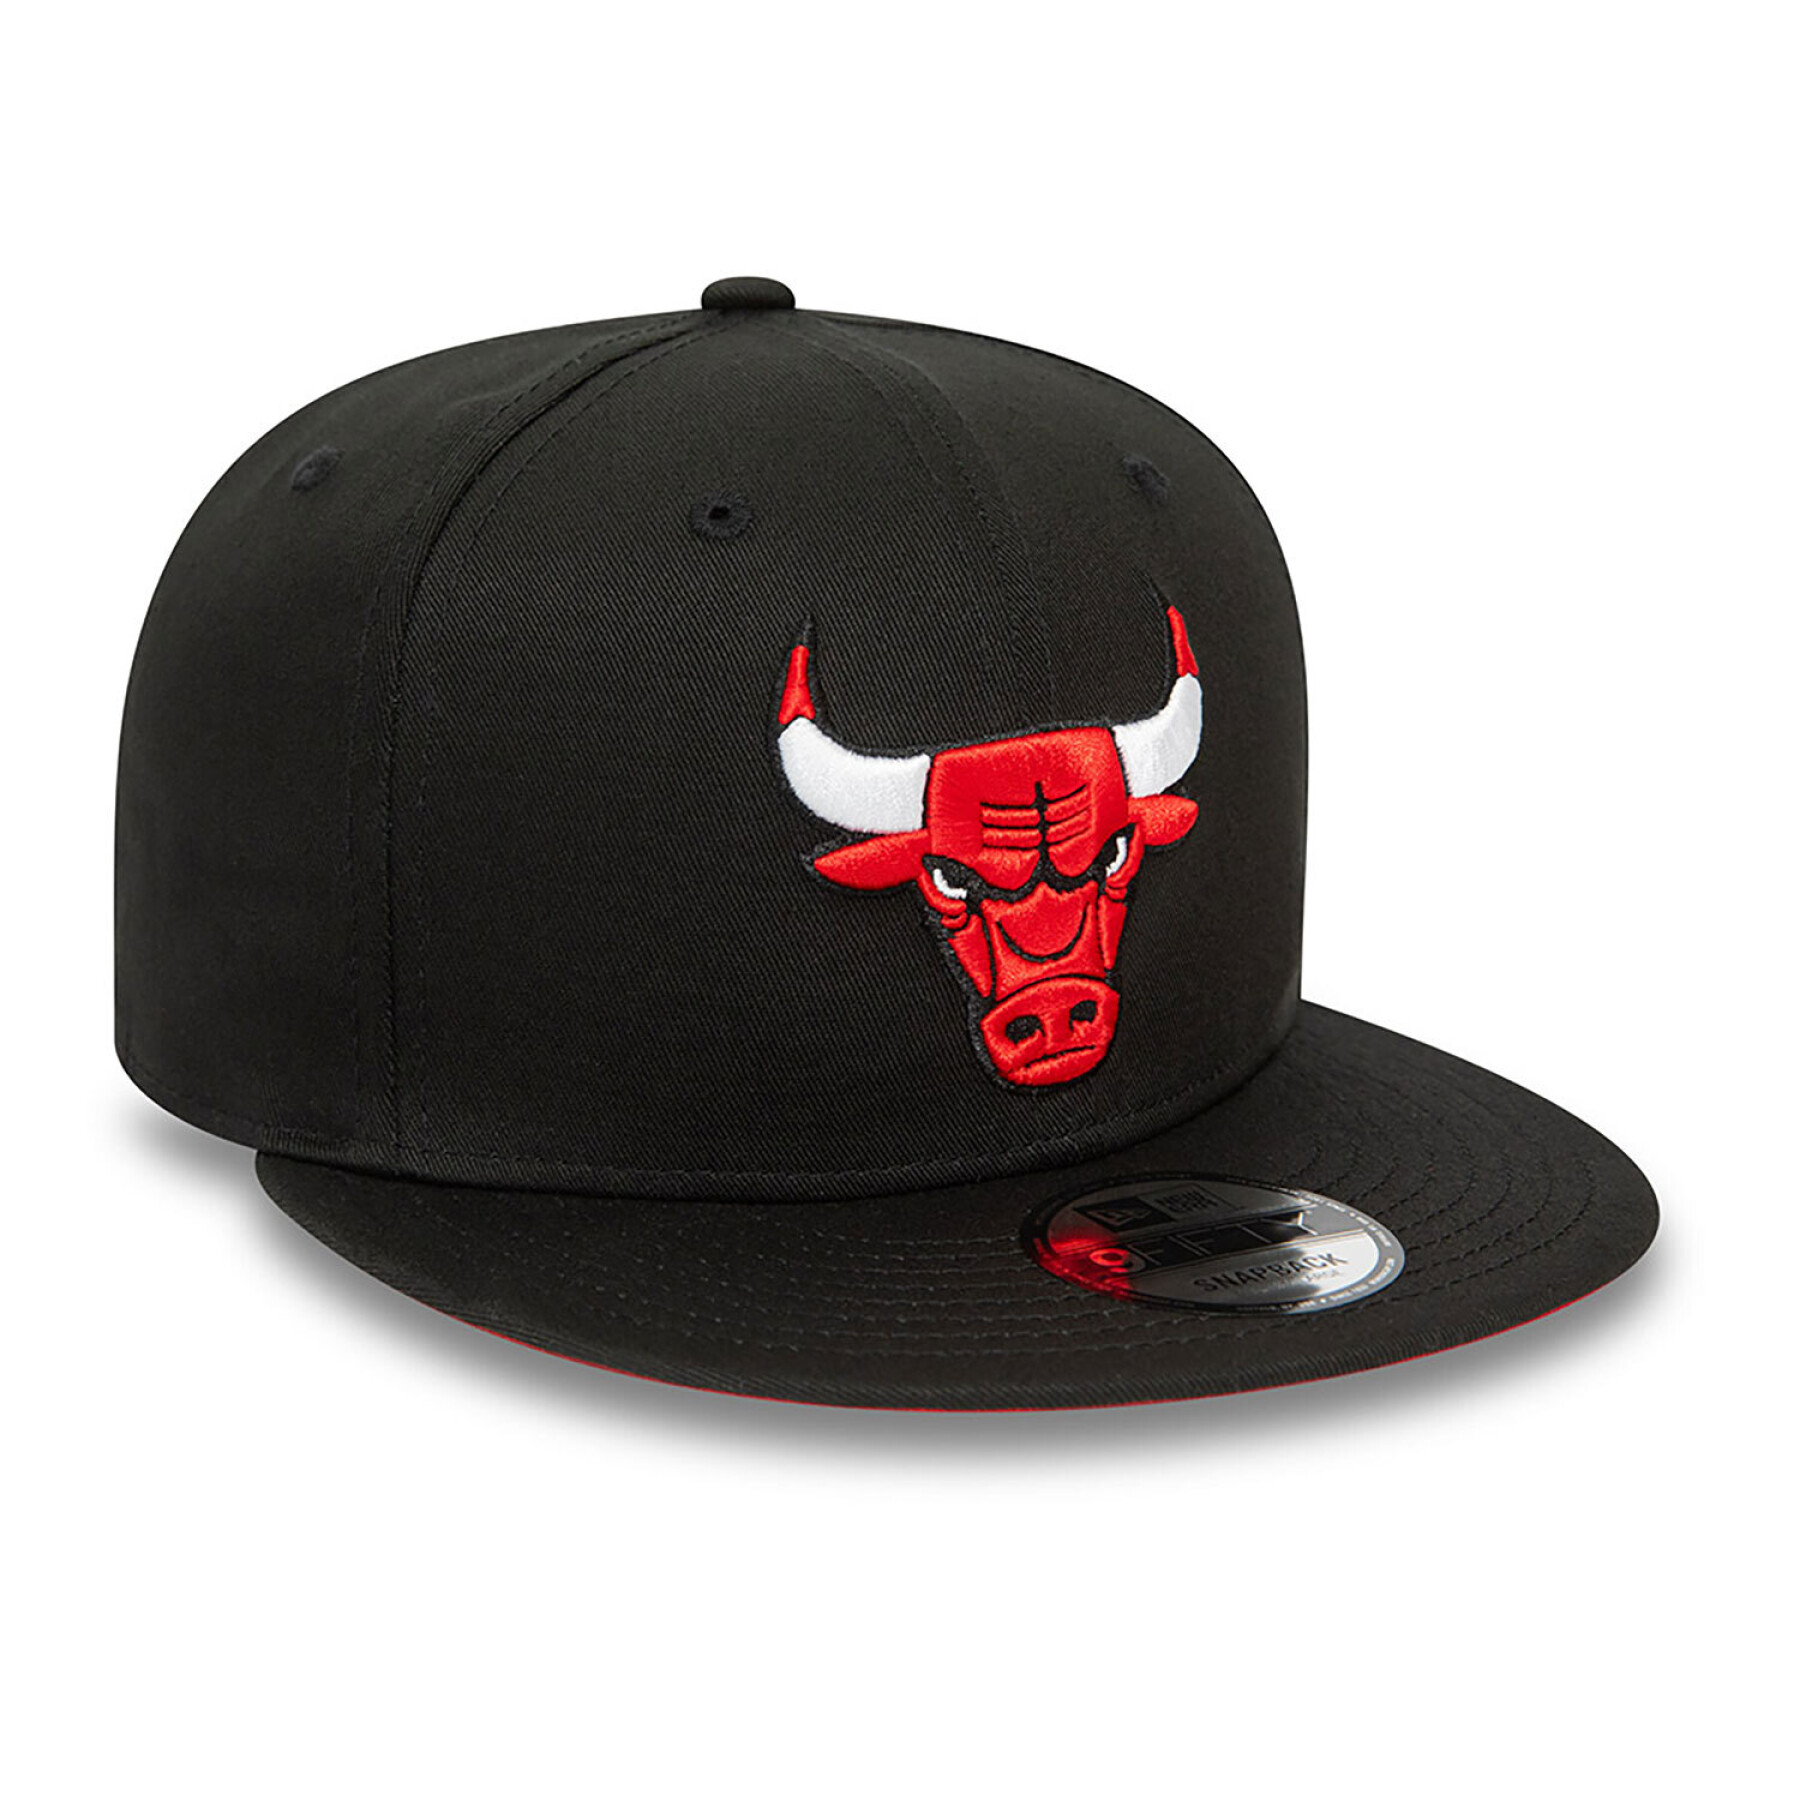 Gorra New Era Chicago Bulls 9FIFTY